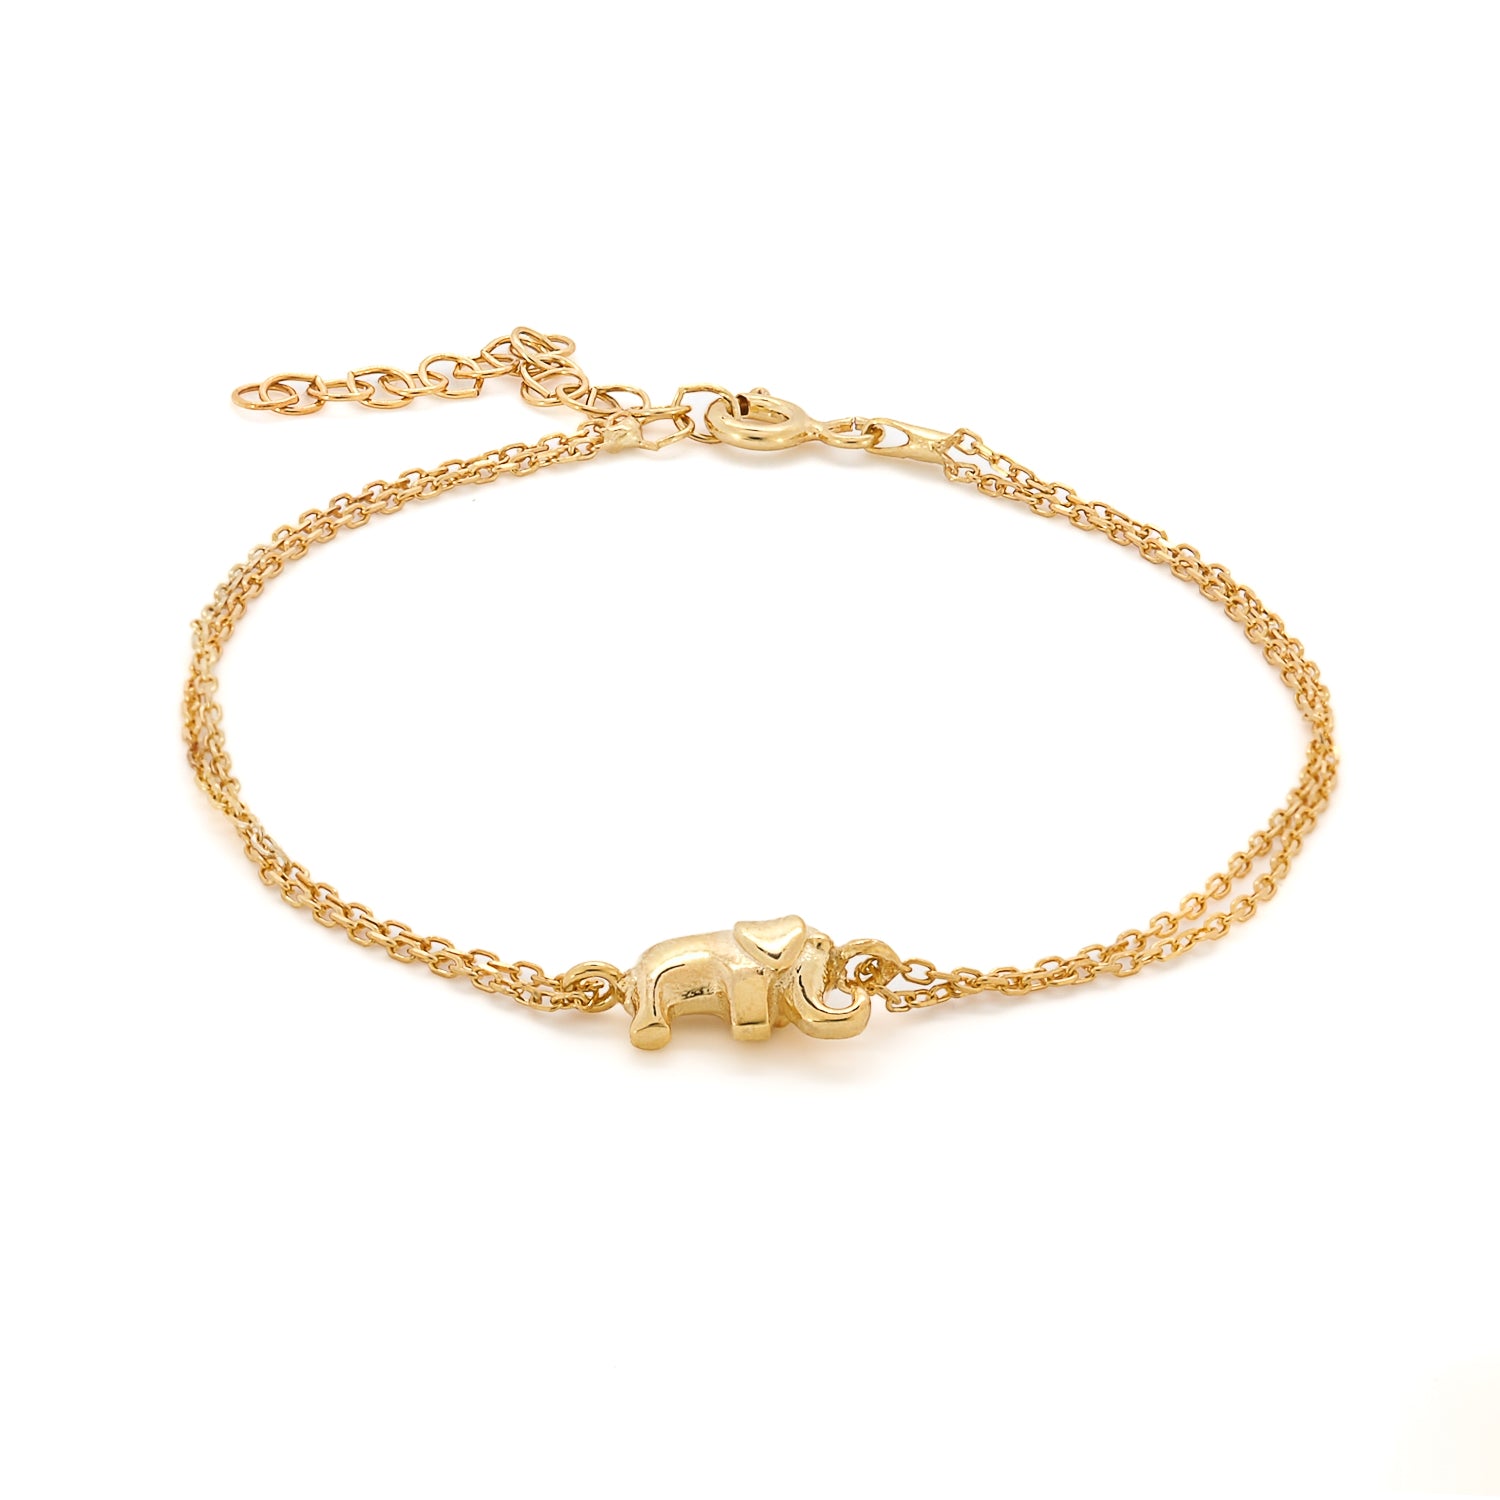 Graceful charm: Dainty Gold Elephant Bracelet.